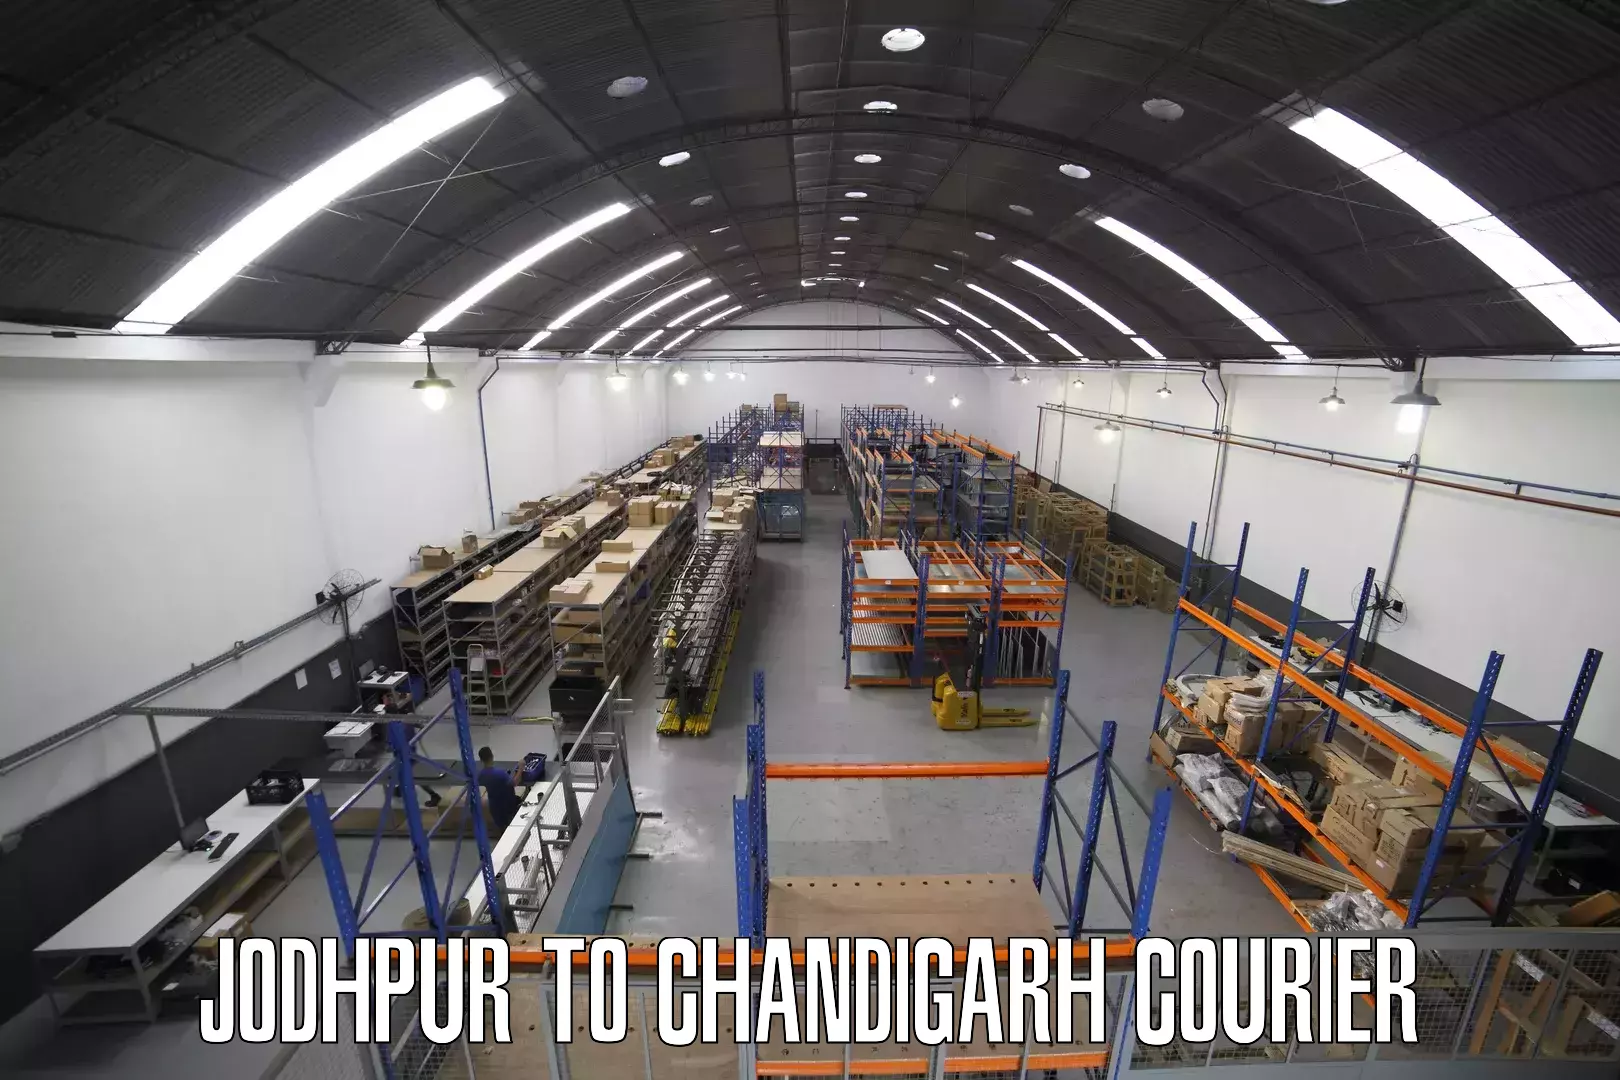 Professional courier handling Jodhpur to Chandigarh